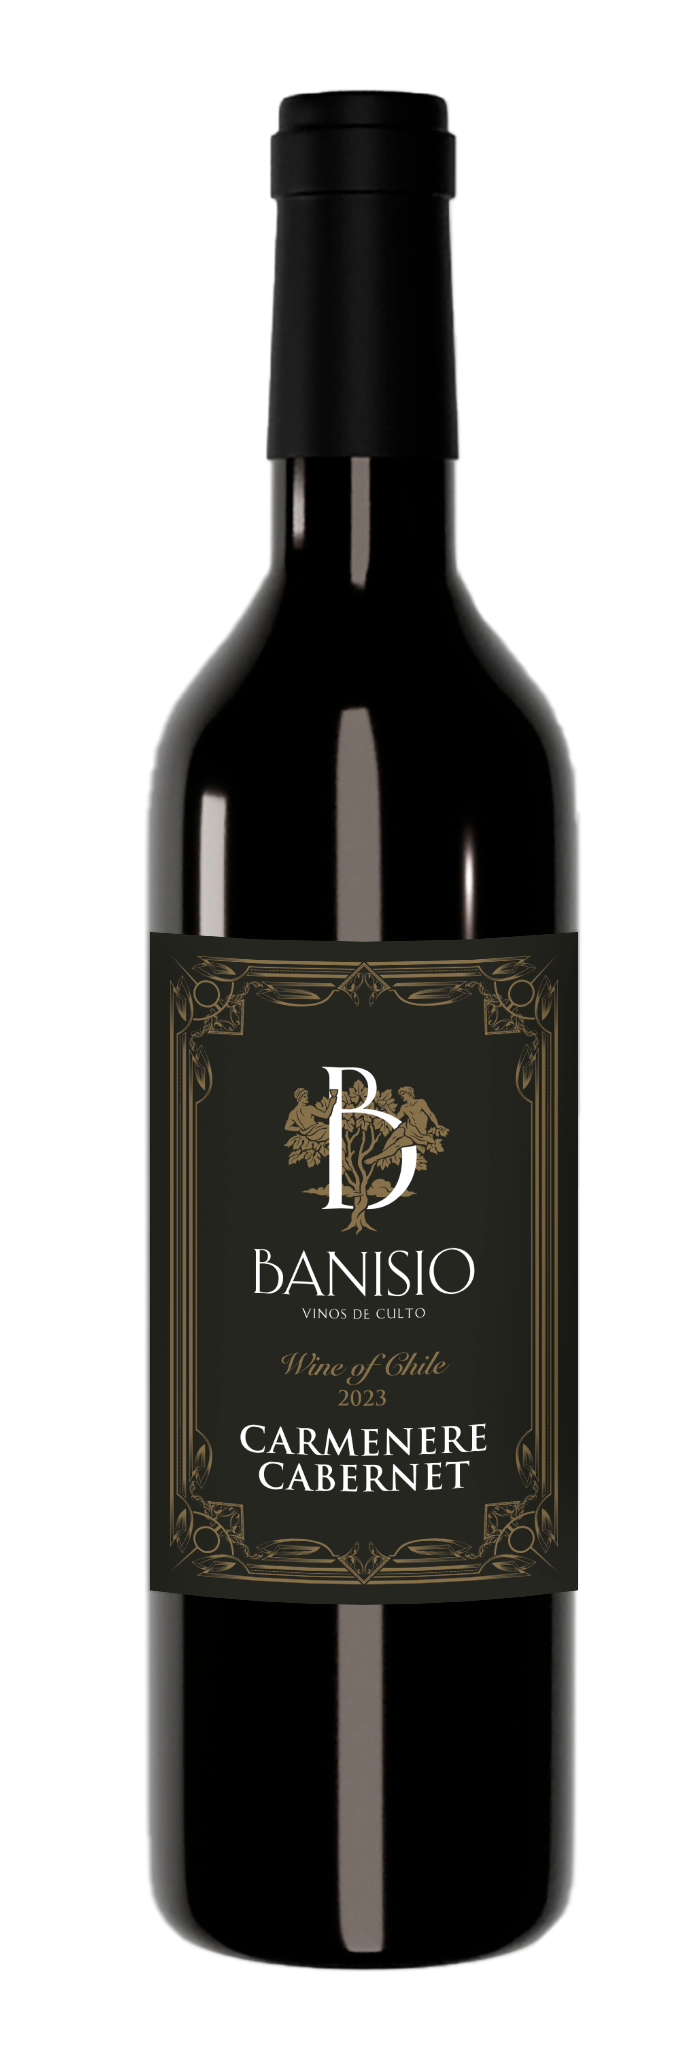 Wine from Chile, Carmenere Cabernet - Banisio